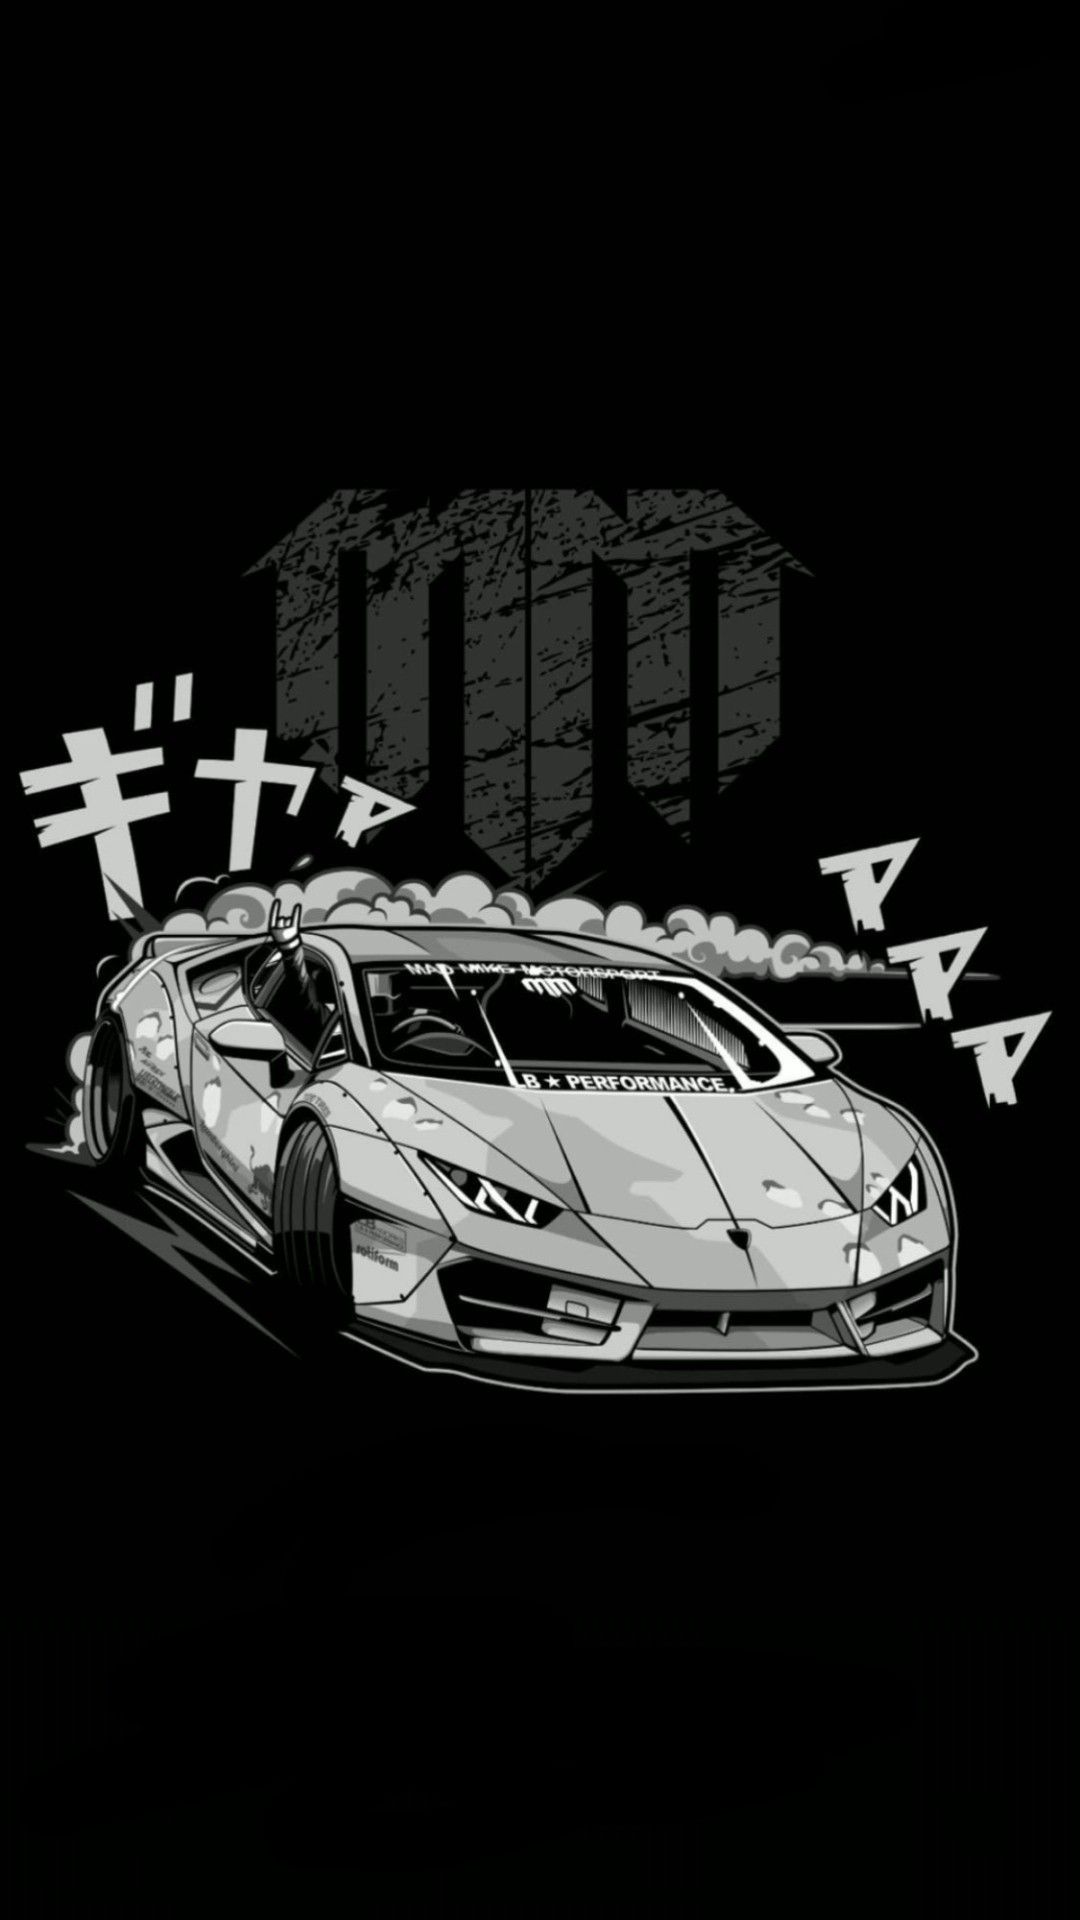 Mad Mike. Drift Lamborghini Huracan Wallpaper for Phone. Car wallpaper, Cool cars, Cool car drawings